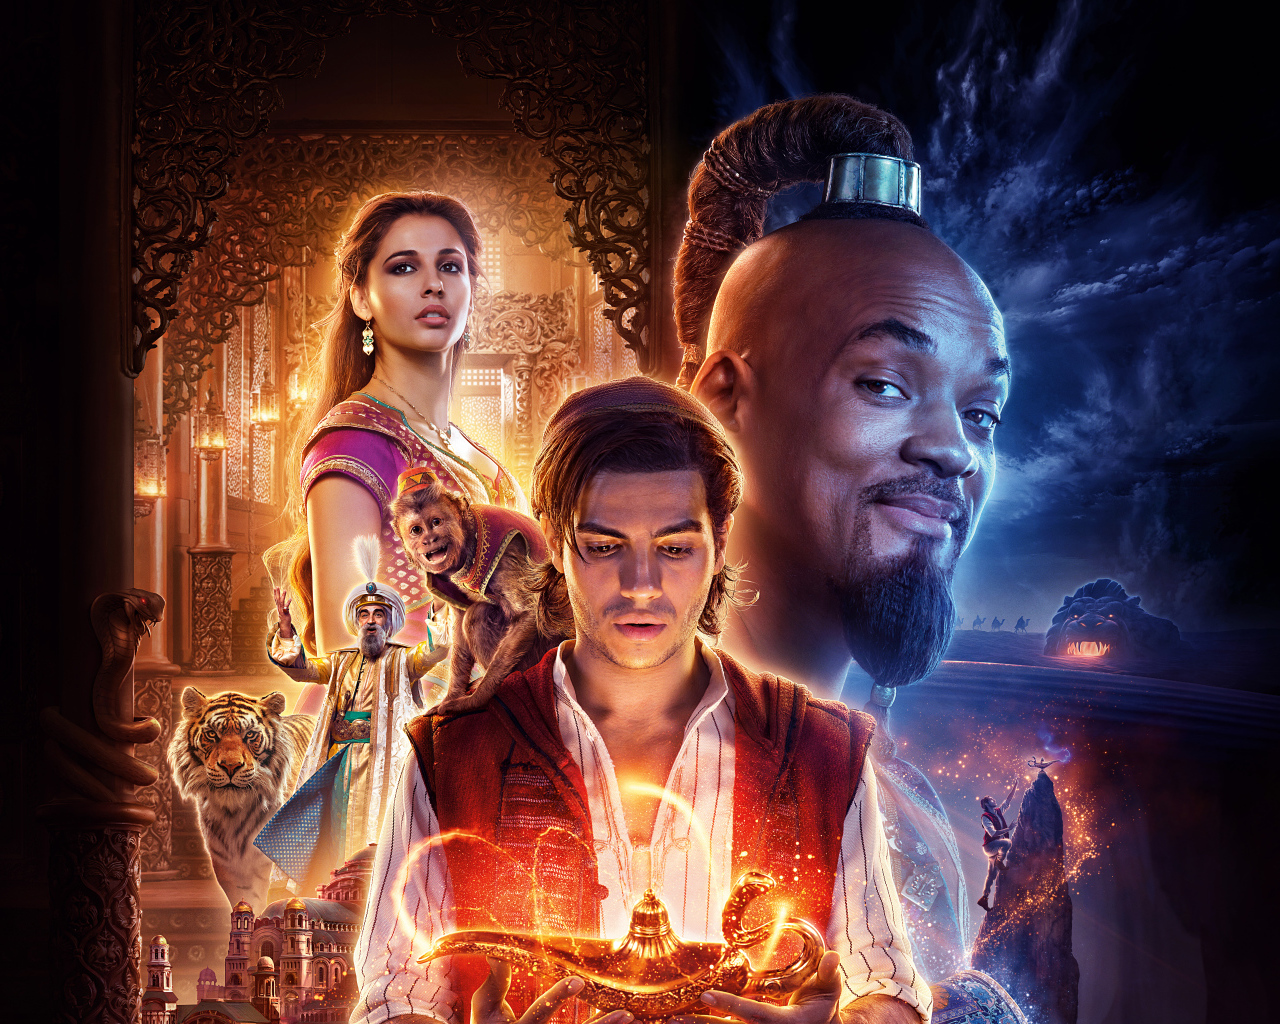 Poster of a new fantasy film Aladdin, 2019